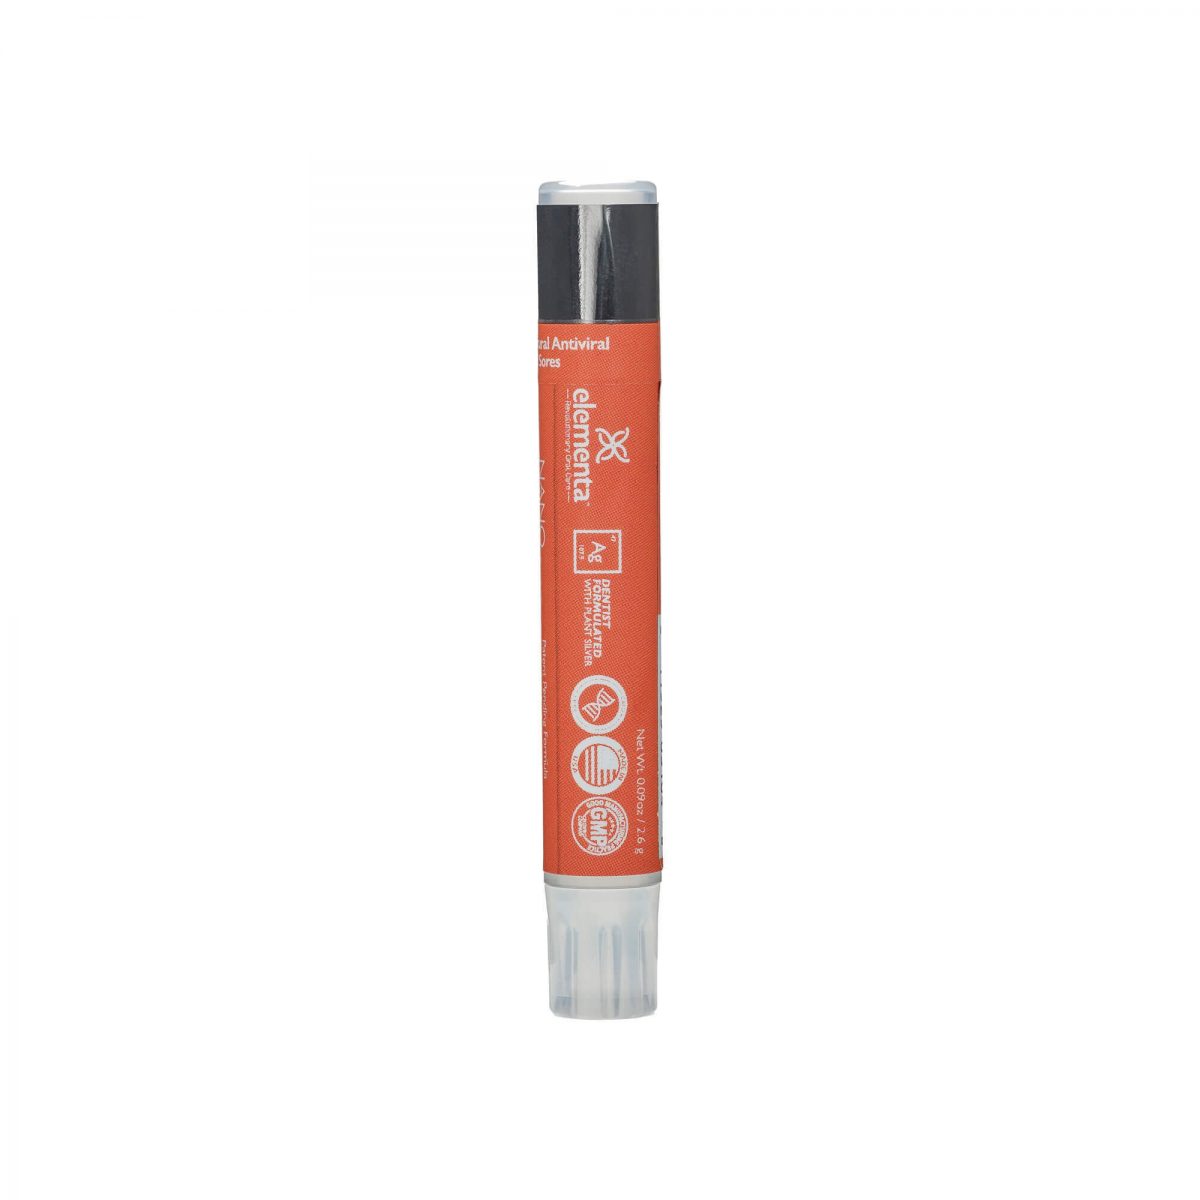 Elementa nano silver lip balm pen natural tropical orange flavored with orange labeling on white background